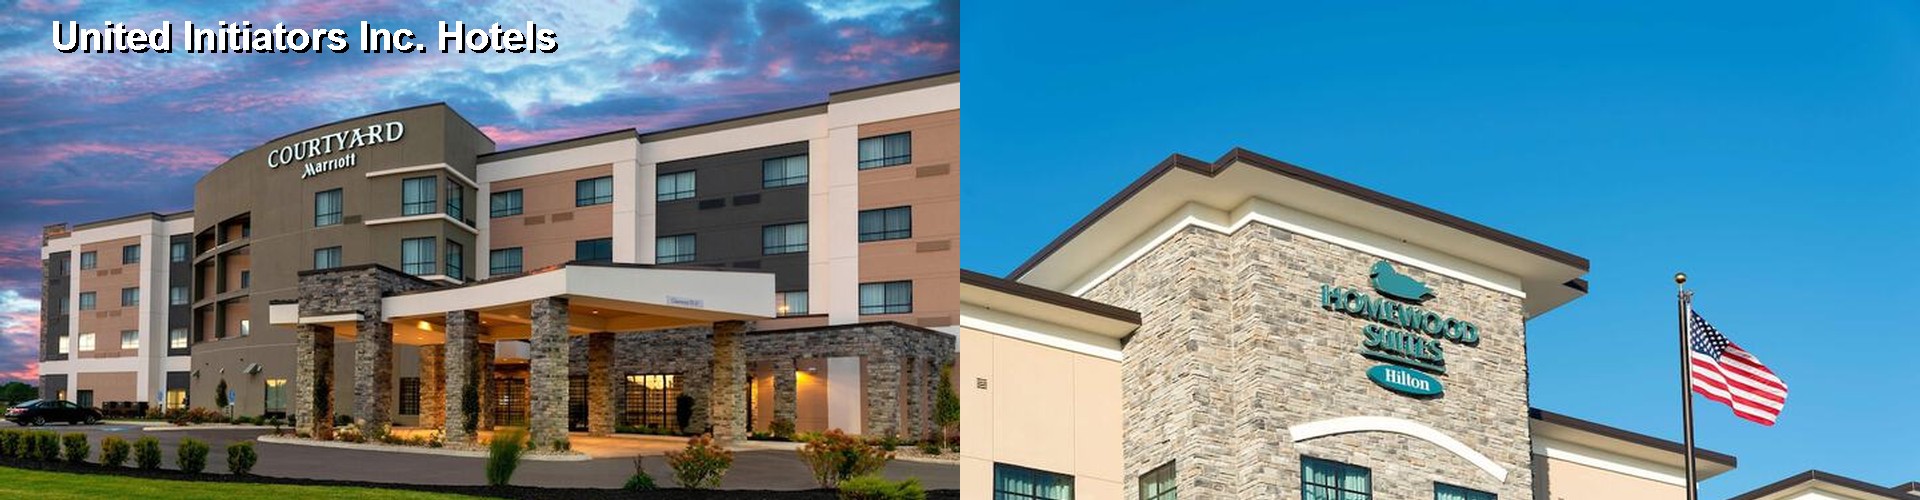 4 Best Hotels near United Initiators Inc.